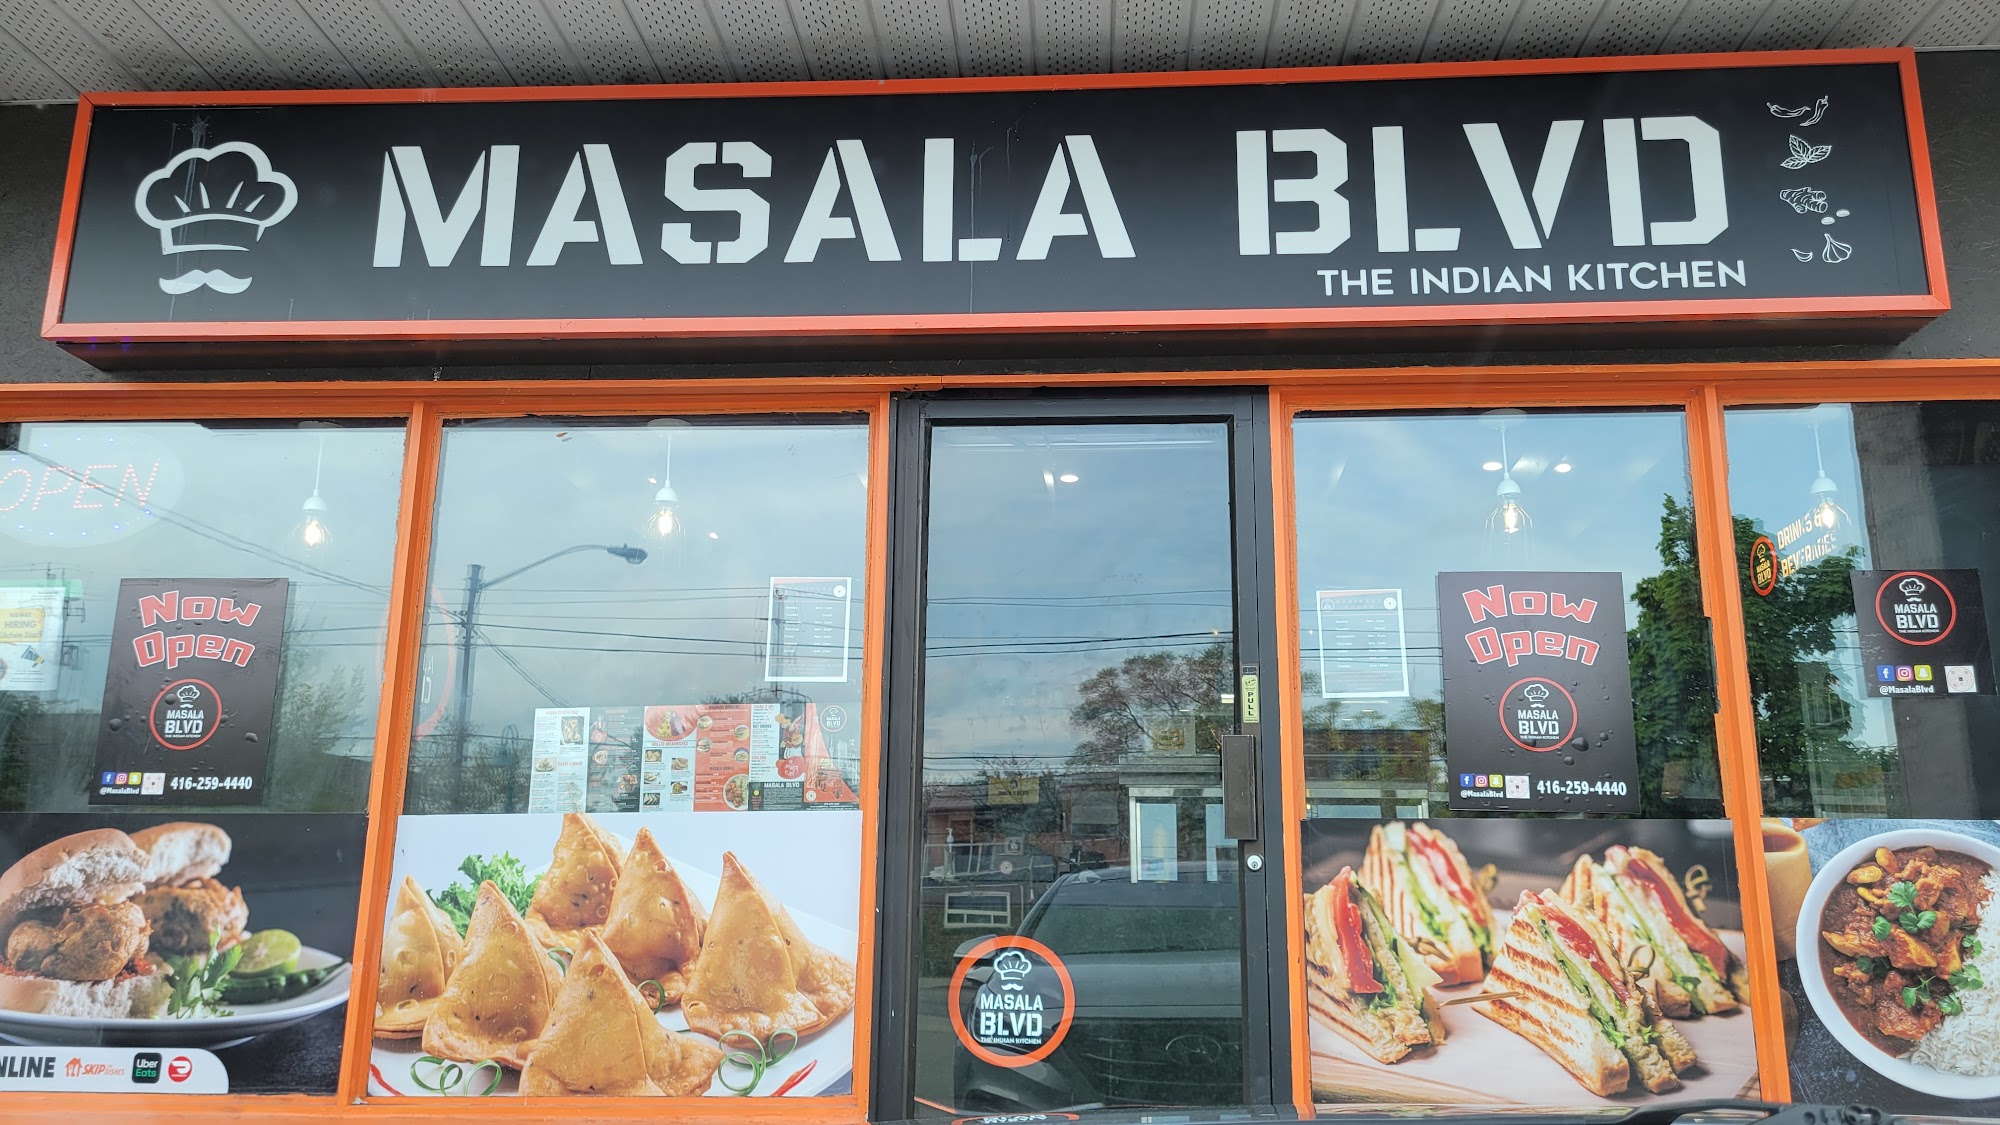 Masala BLVD - The Indian Kitchen